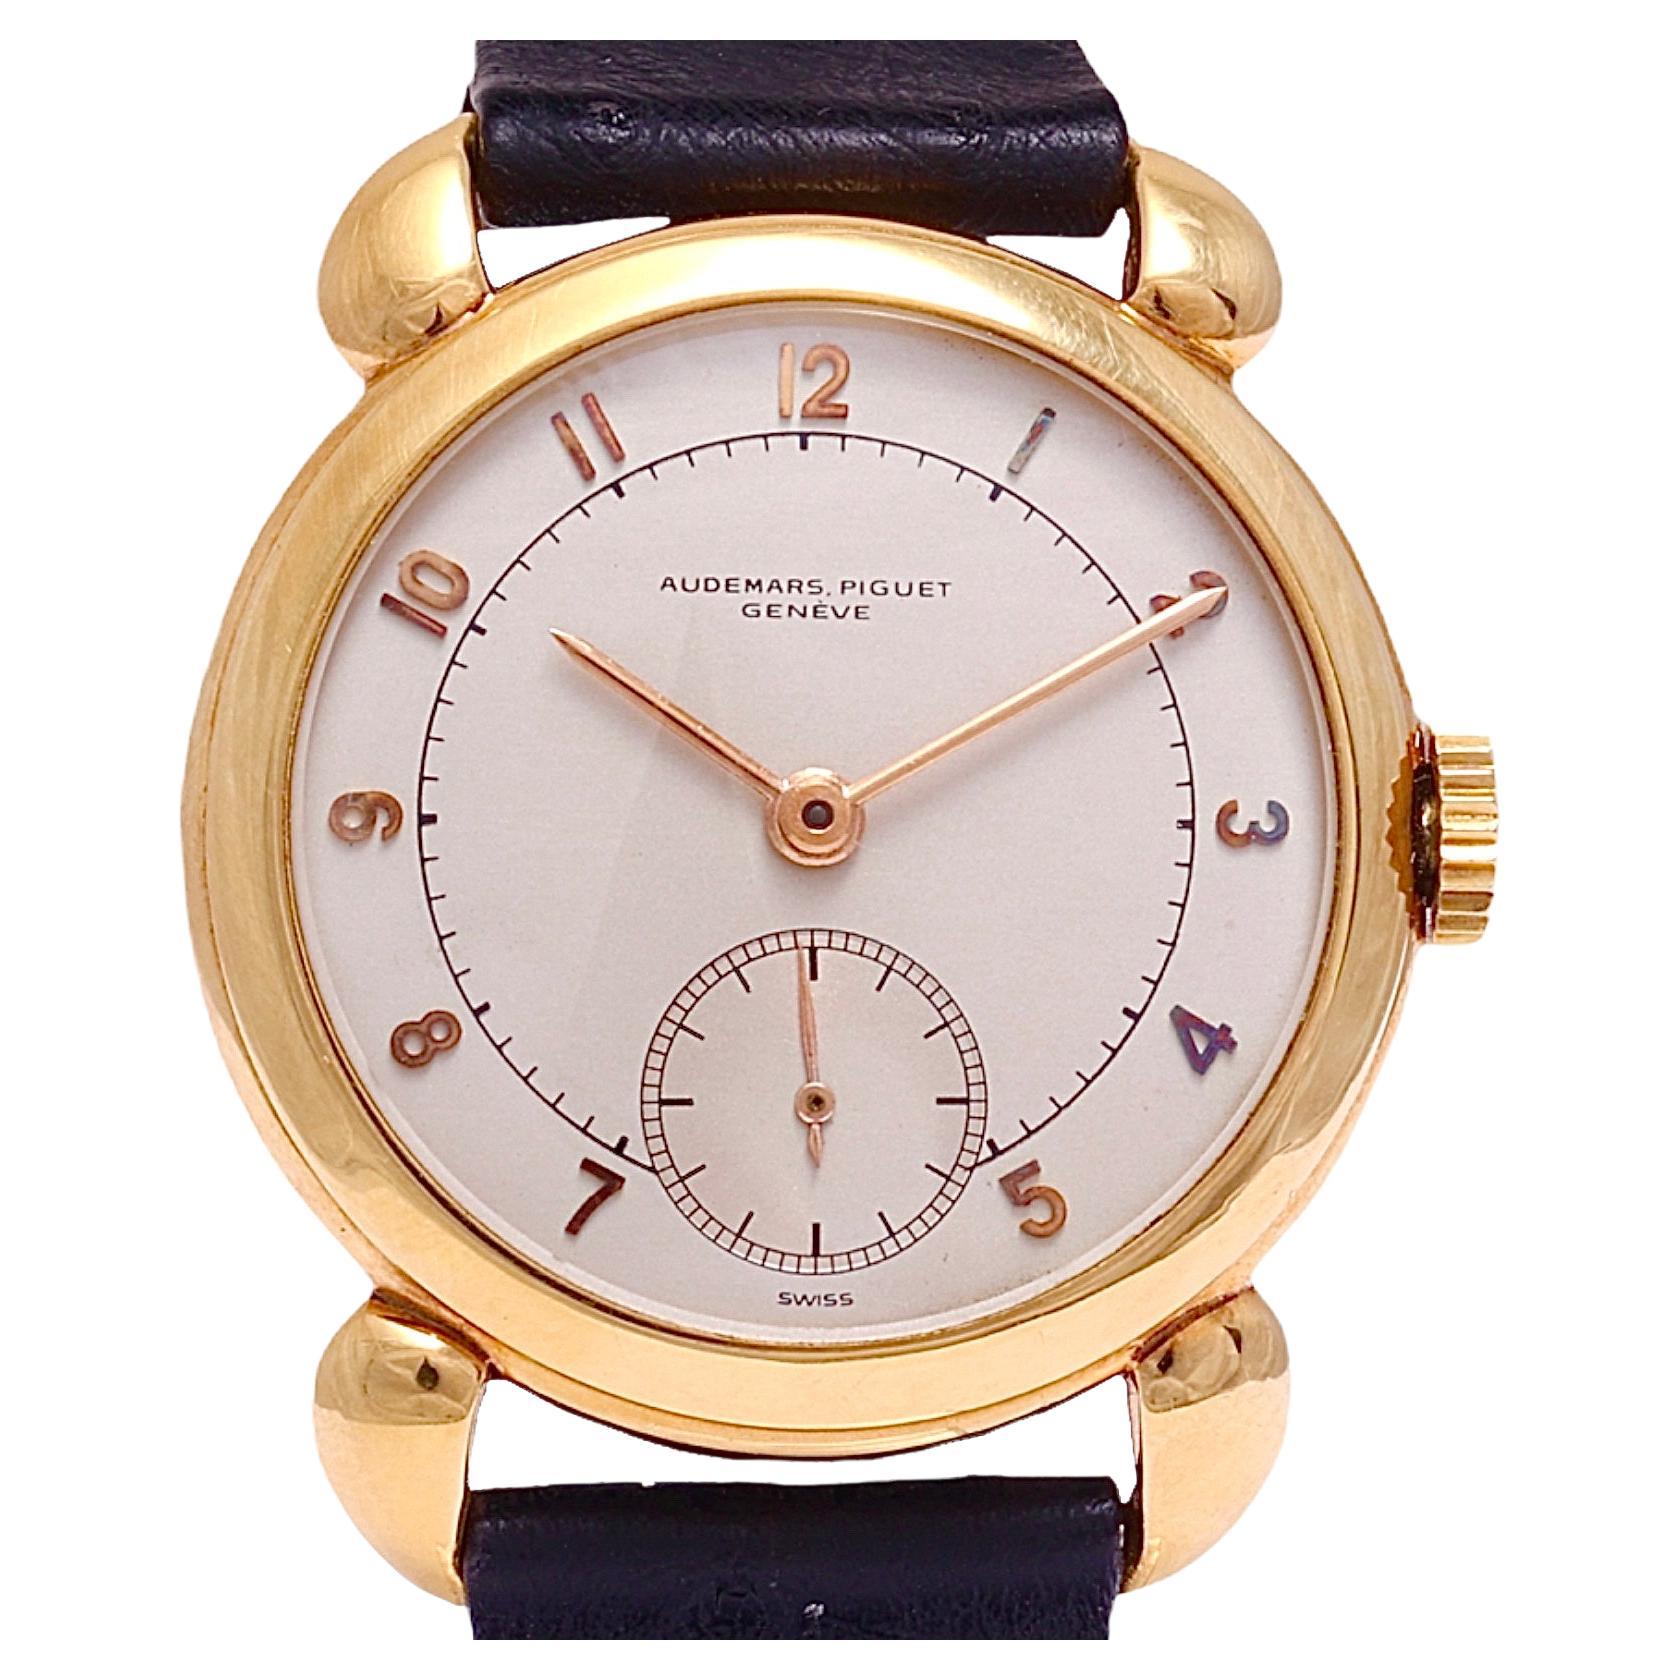 18 Kt Gold Audemars Piguet Calatrava Vintage Rare Collectors Wrist Watch 1940's